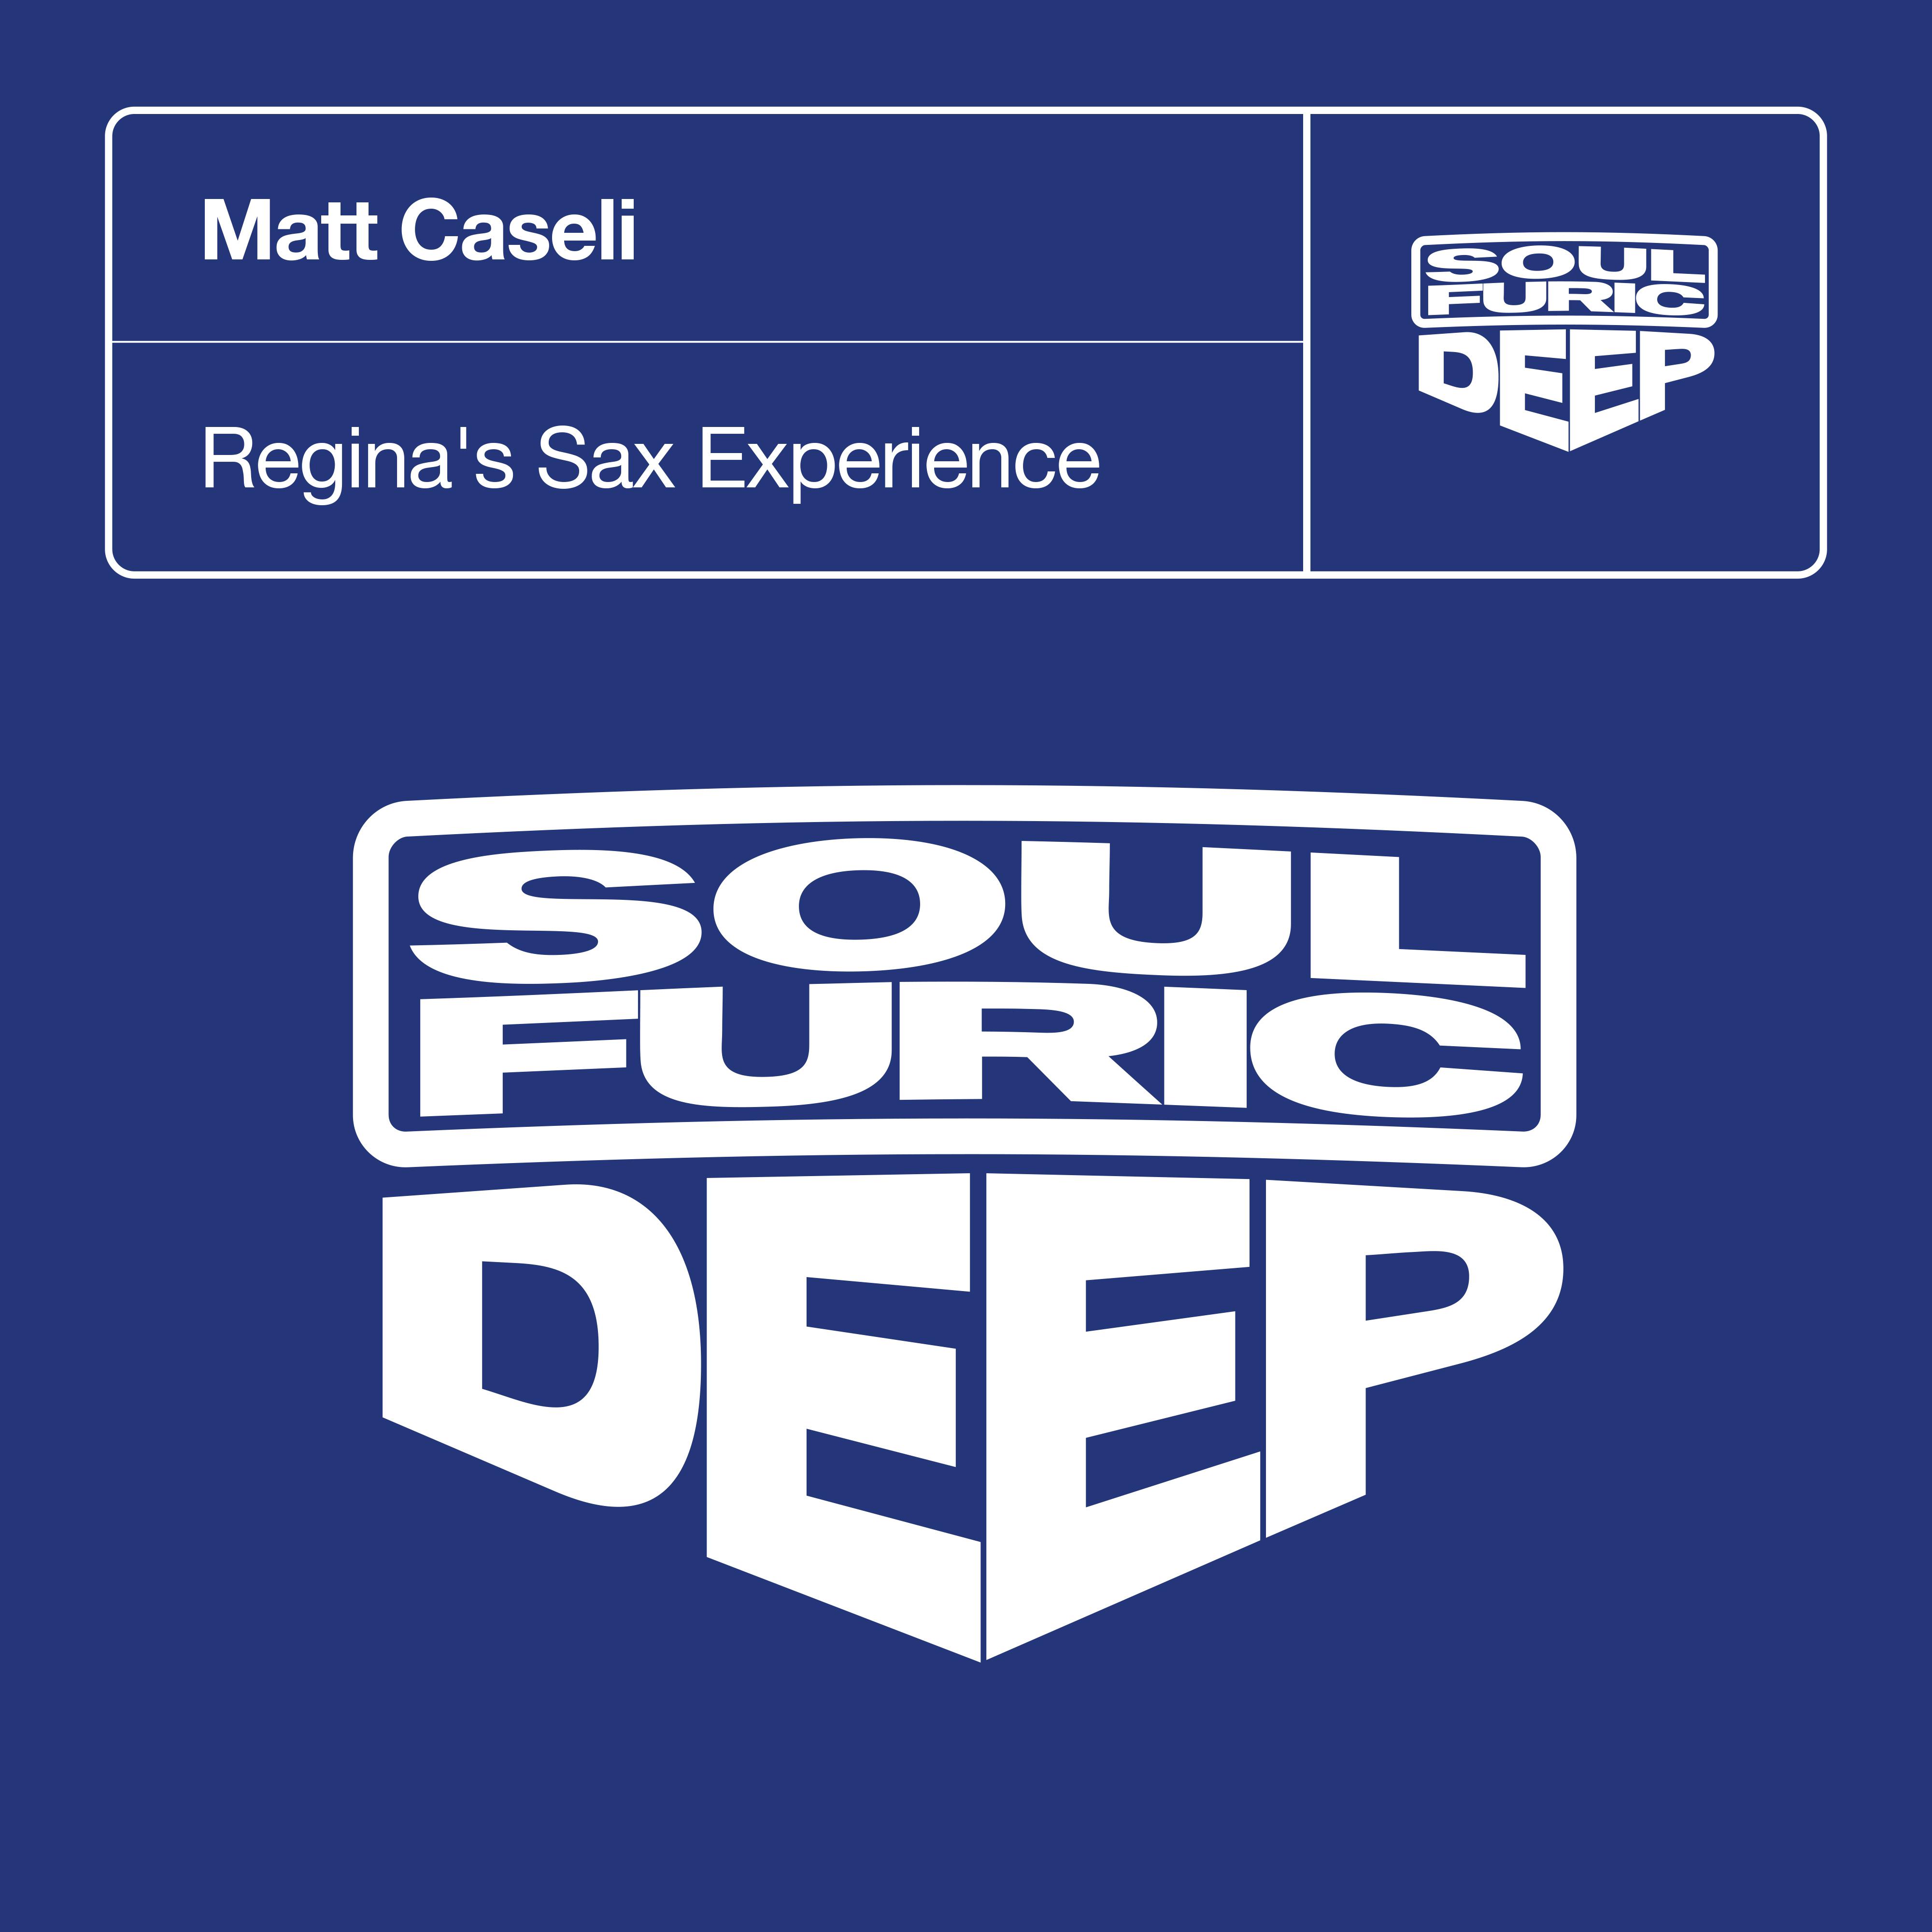 Regina's Sax Experience (Caseli's Porn Mix)